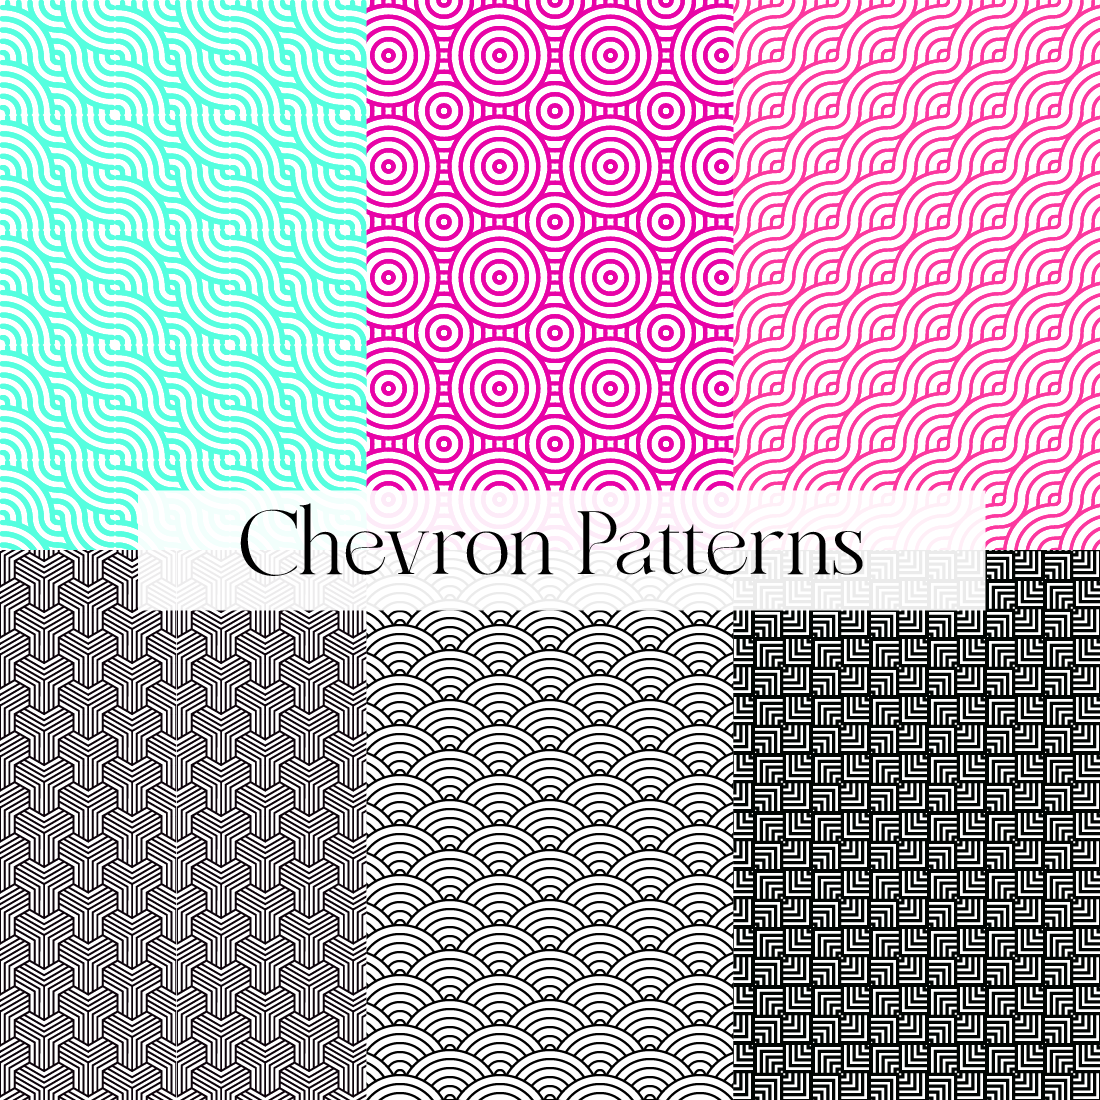 chevron patterns 01 2